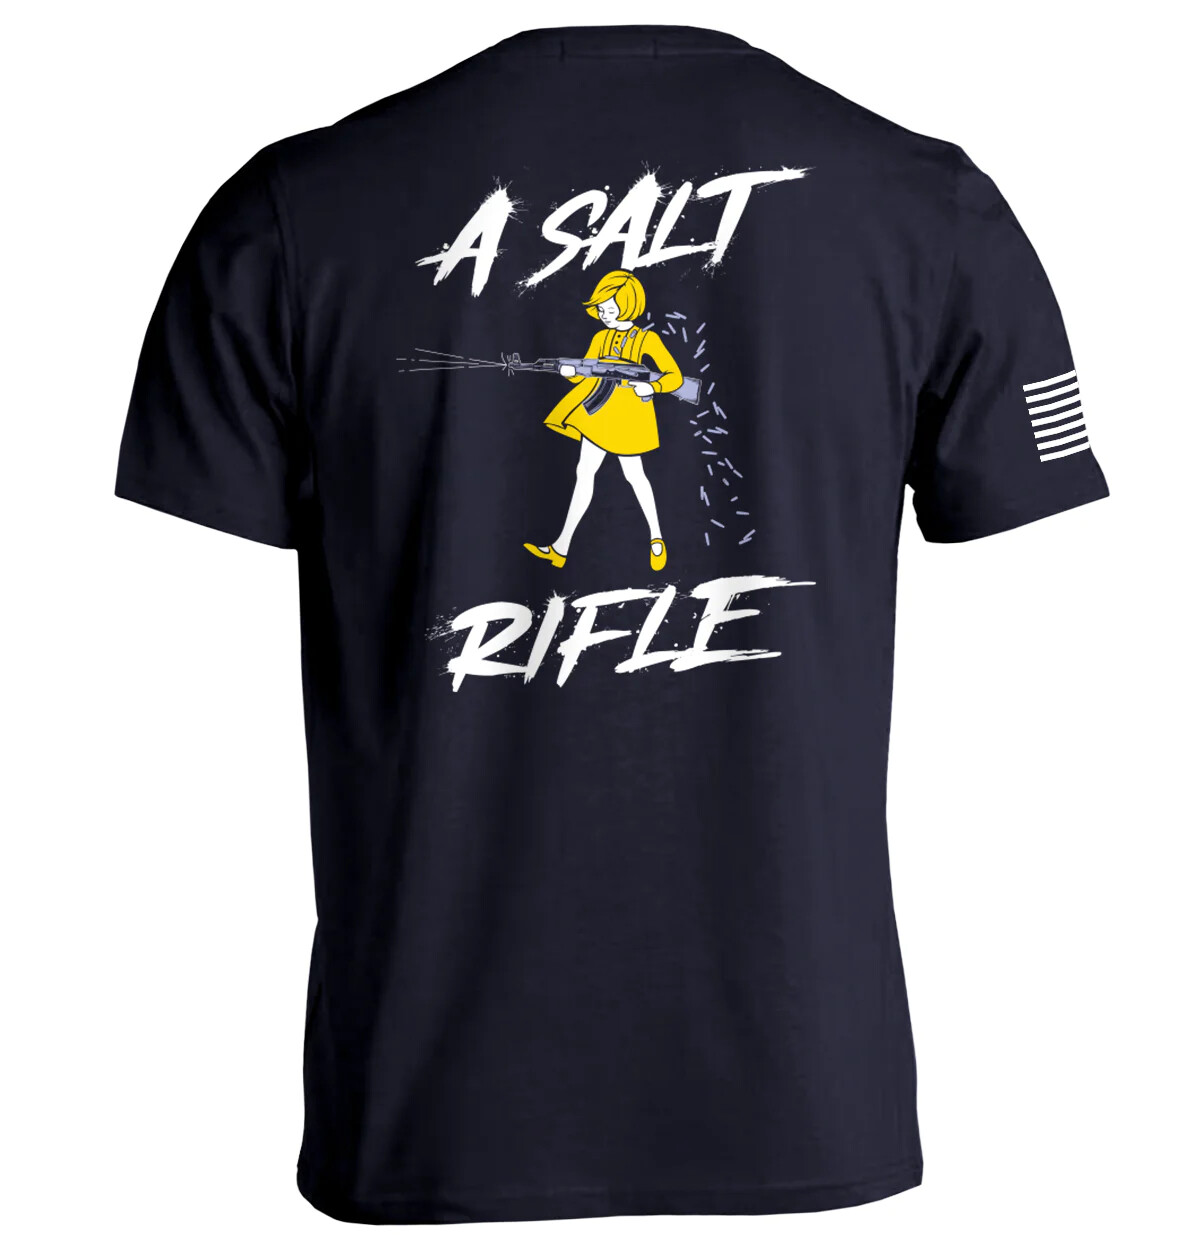 A Salt Rifle Tee, Color: Navy, Size: SM